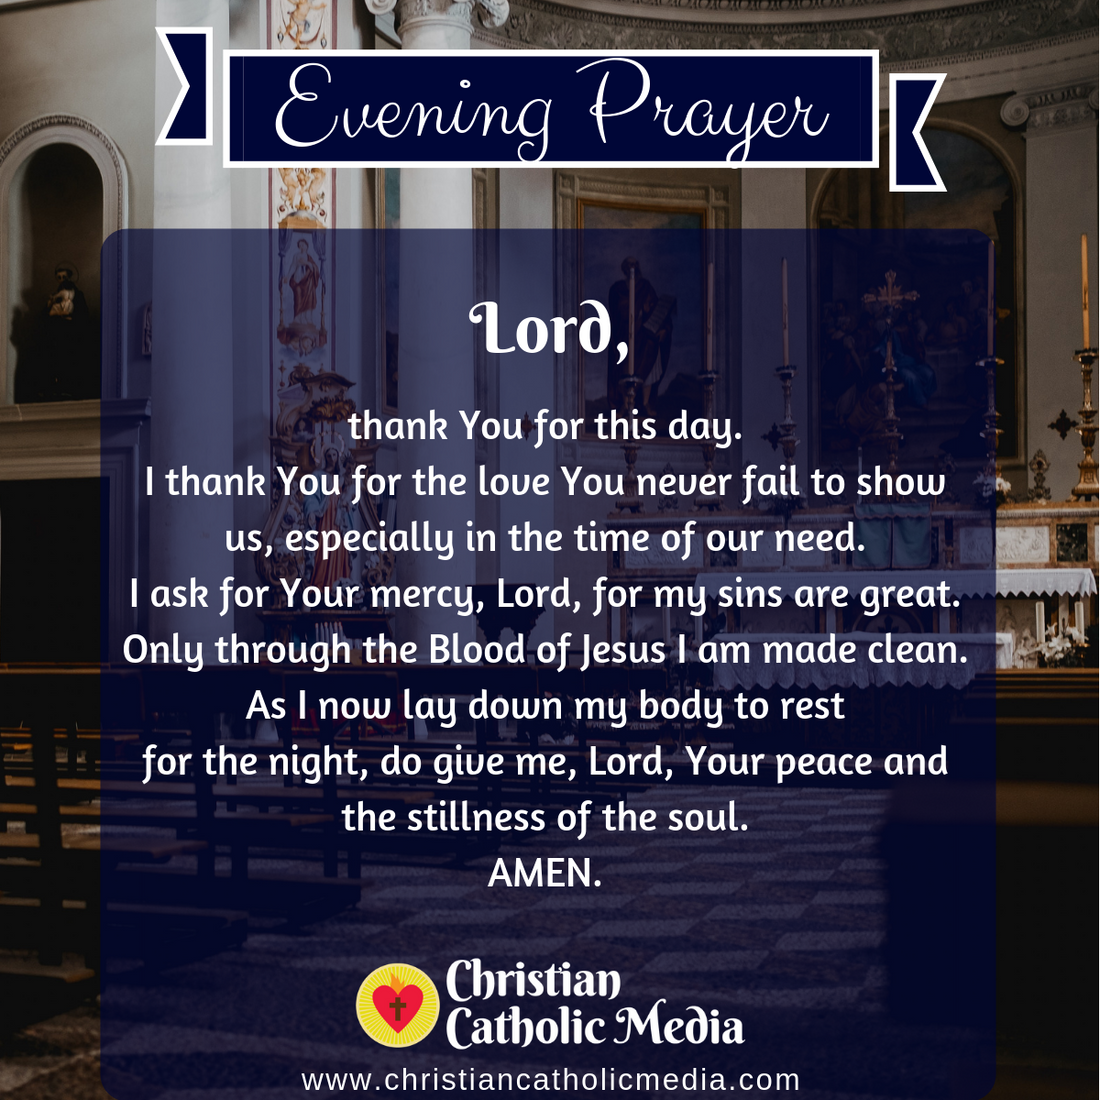 Evening Prayer Catholic Wednesday March 2, 2022